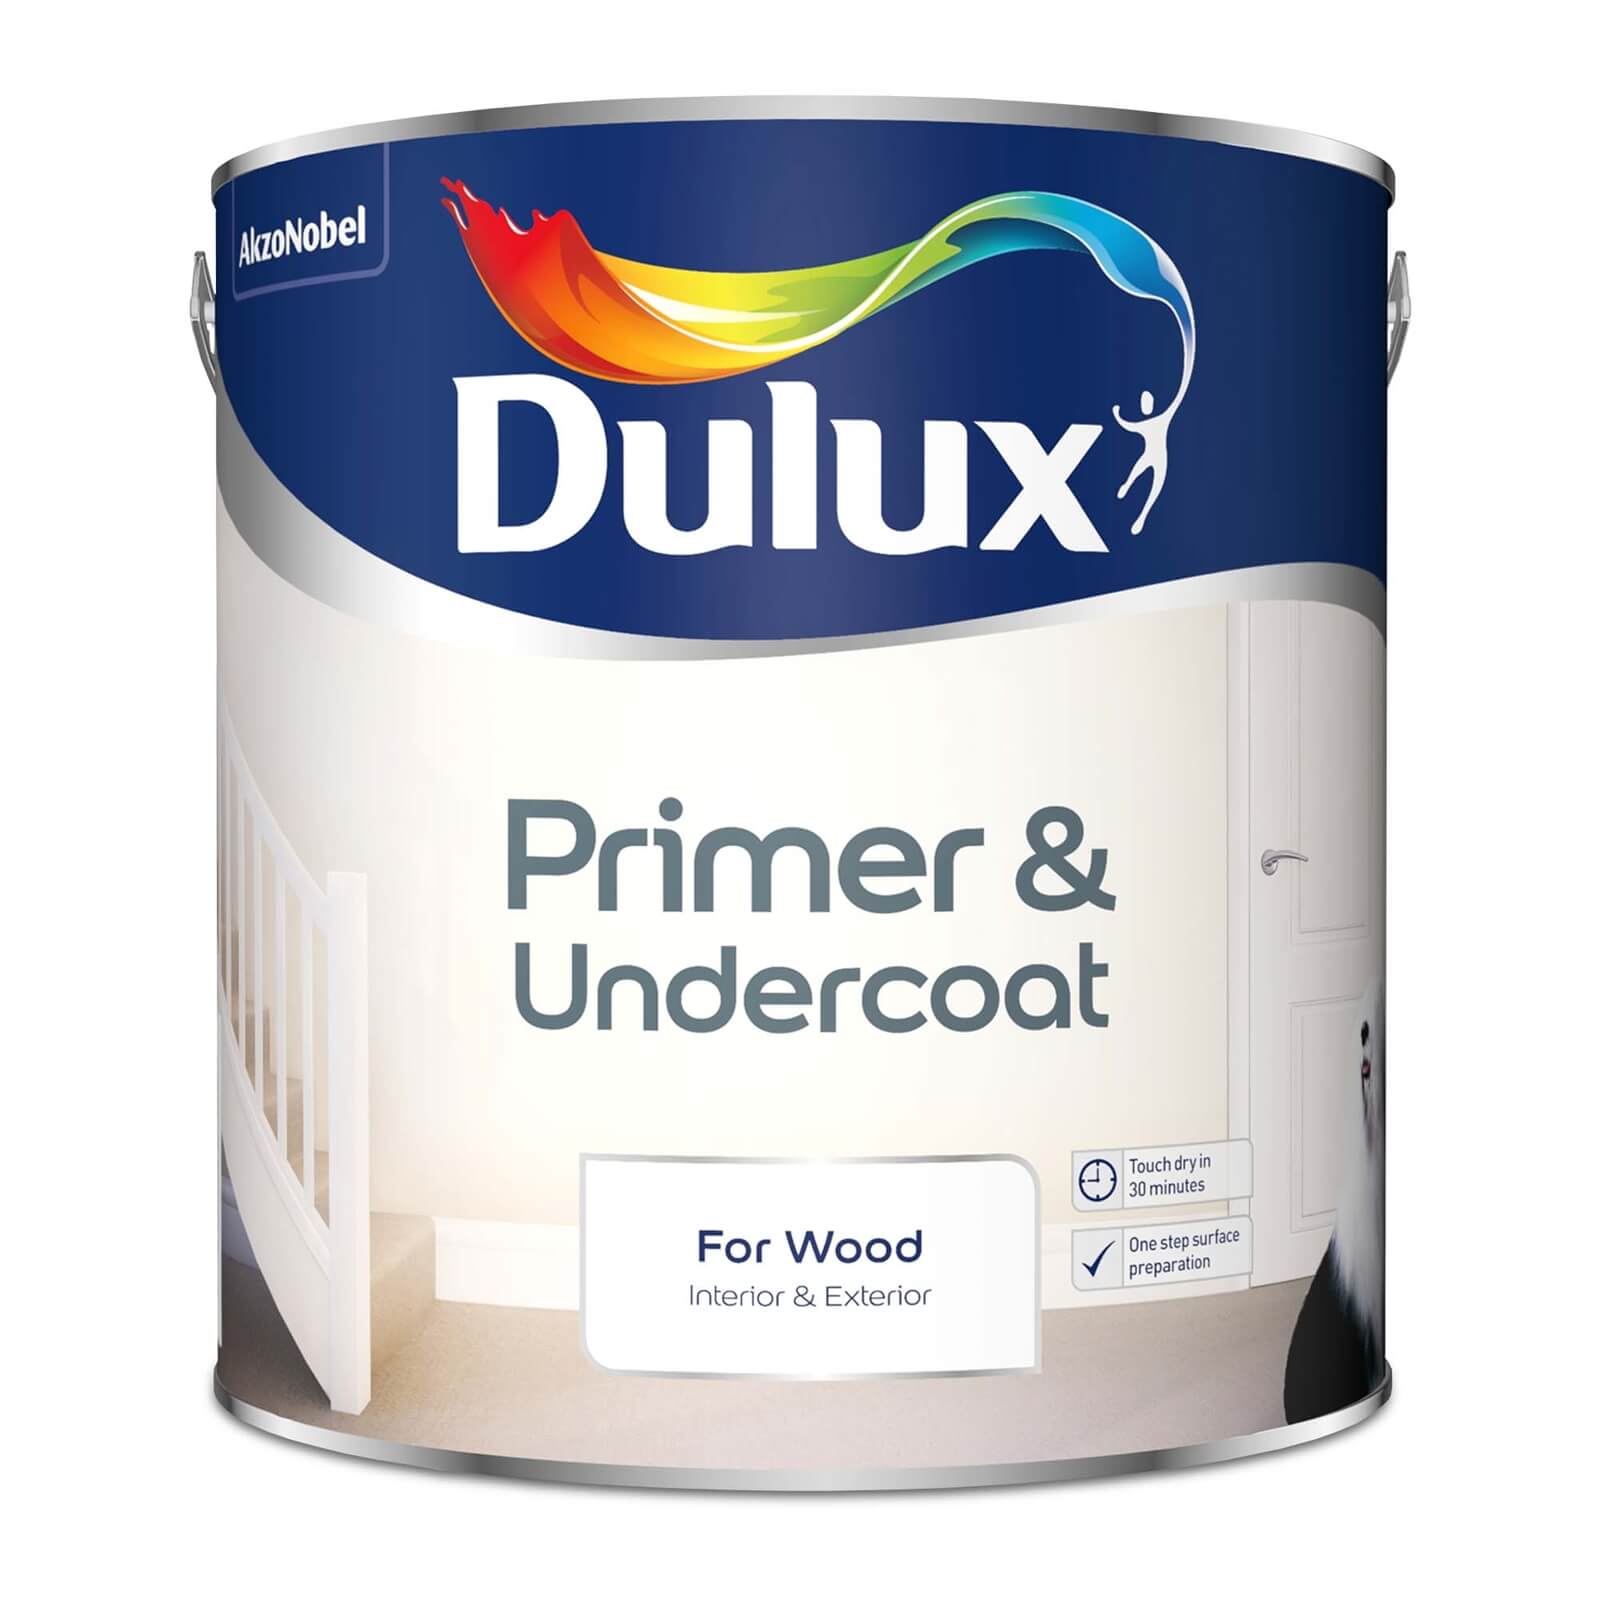 Dulux Primer & Undercoat for Interior & Exterior Wood 2.5L